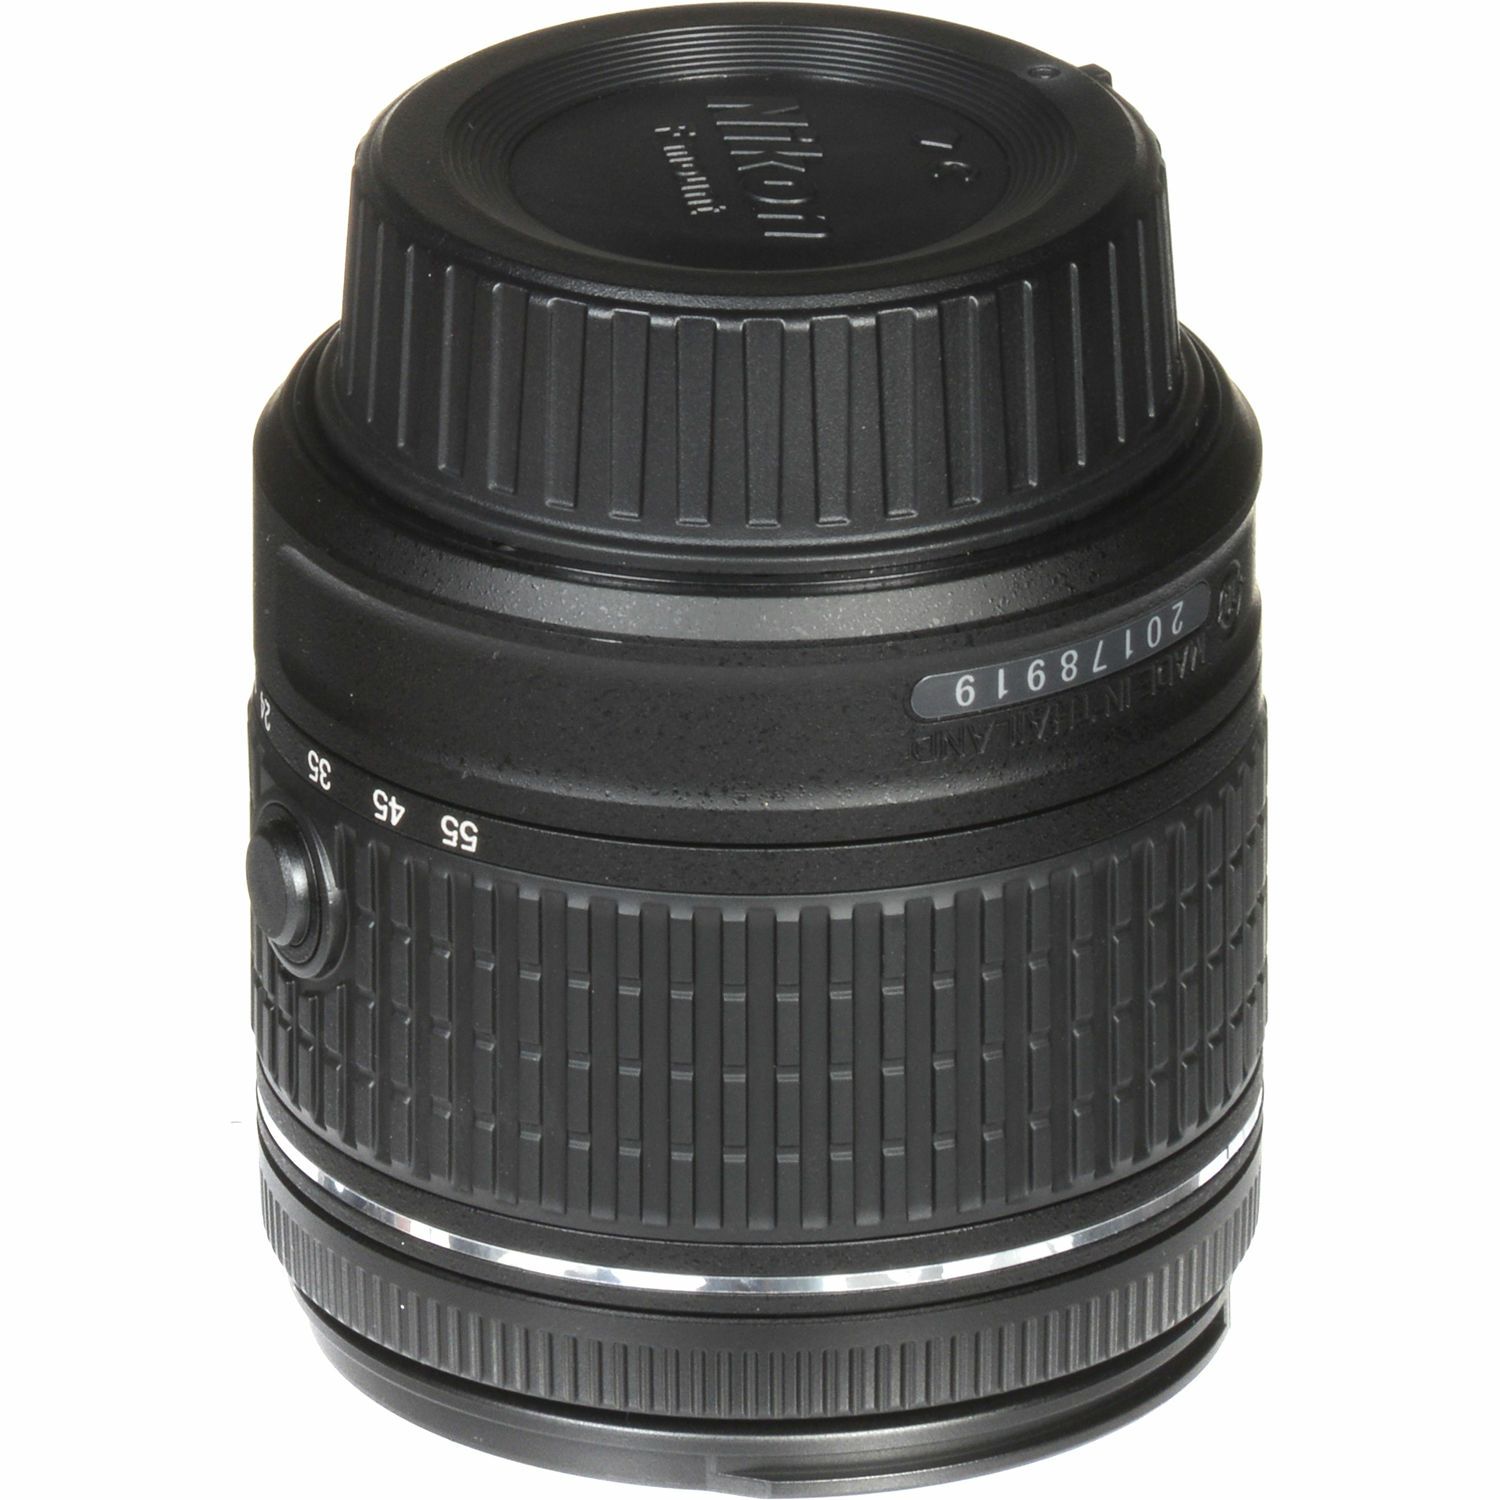 Nikon AF-S 18-55mm f/3.5-5.6G ED II DX standardni objektiv Nikkor 18-55 f/3.5-5.6 auto focus zoom lens (JAA797DB)